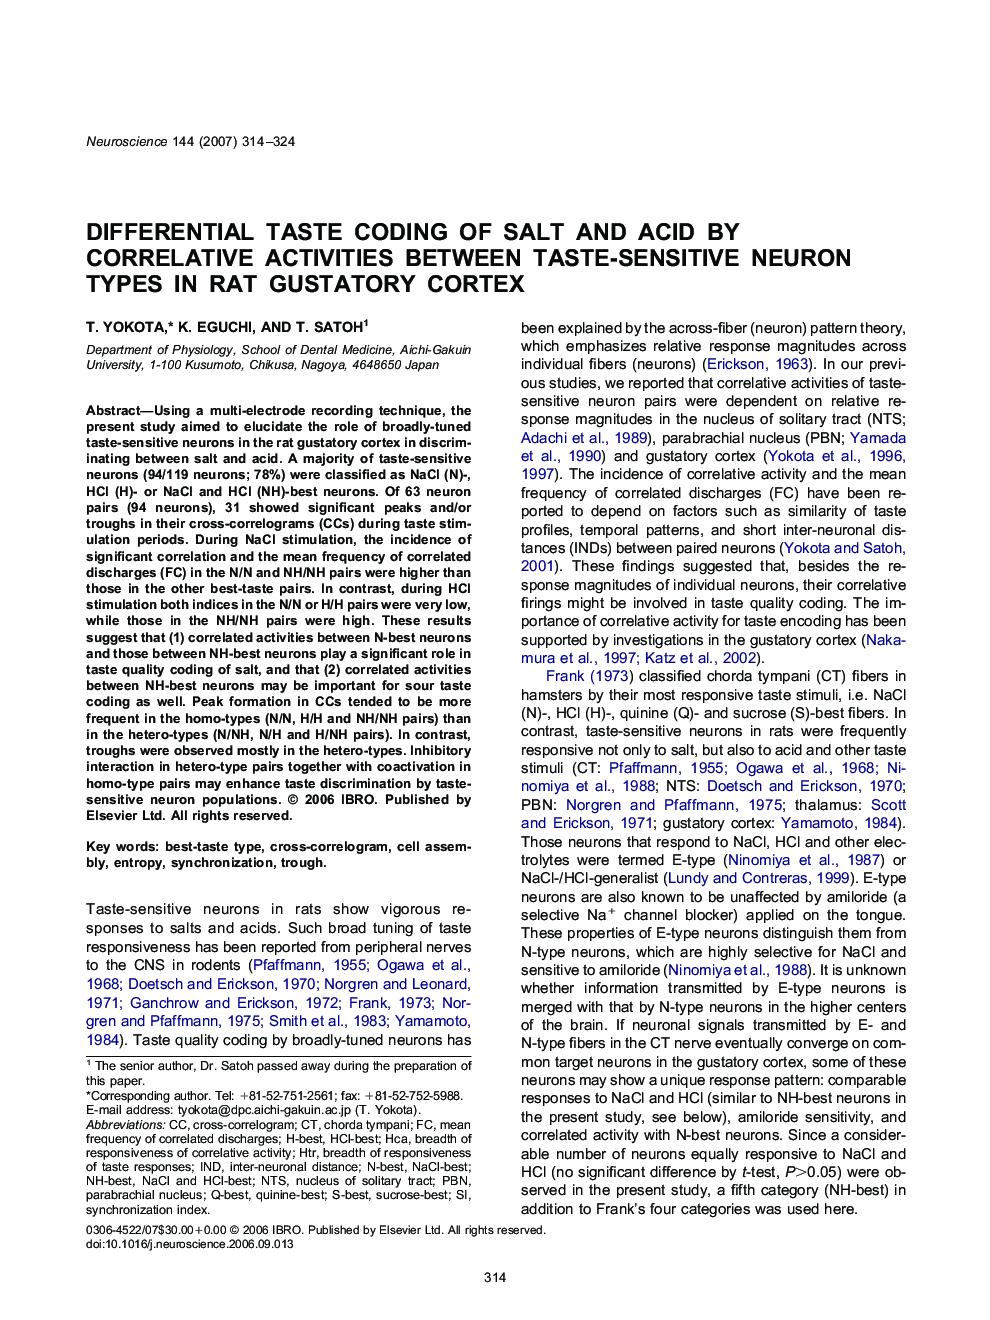 Differential taste coding of salt and acid by correlative activities between taste-sensitive neuron types in rat gustatory cortex